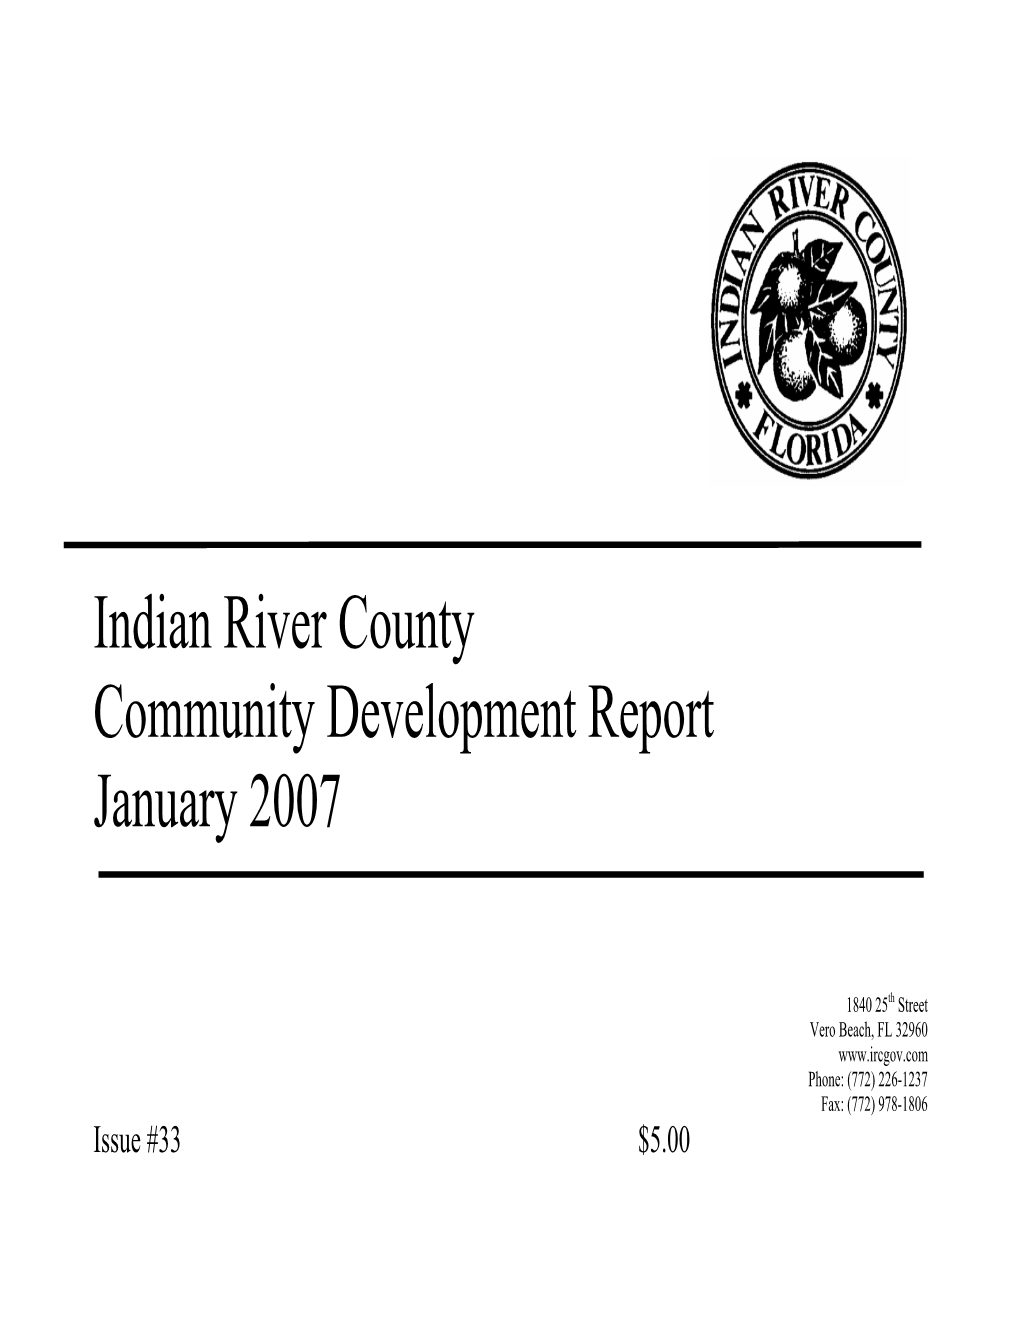 Indian River County Community Development Report 2007